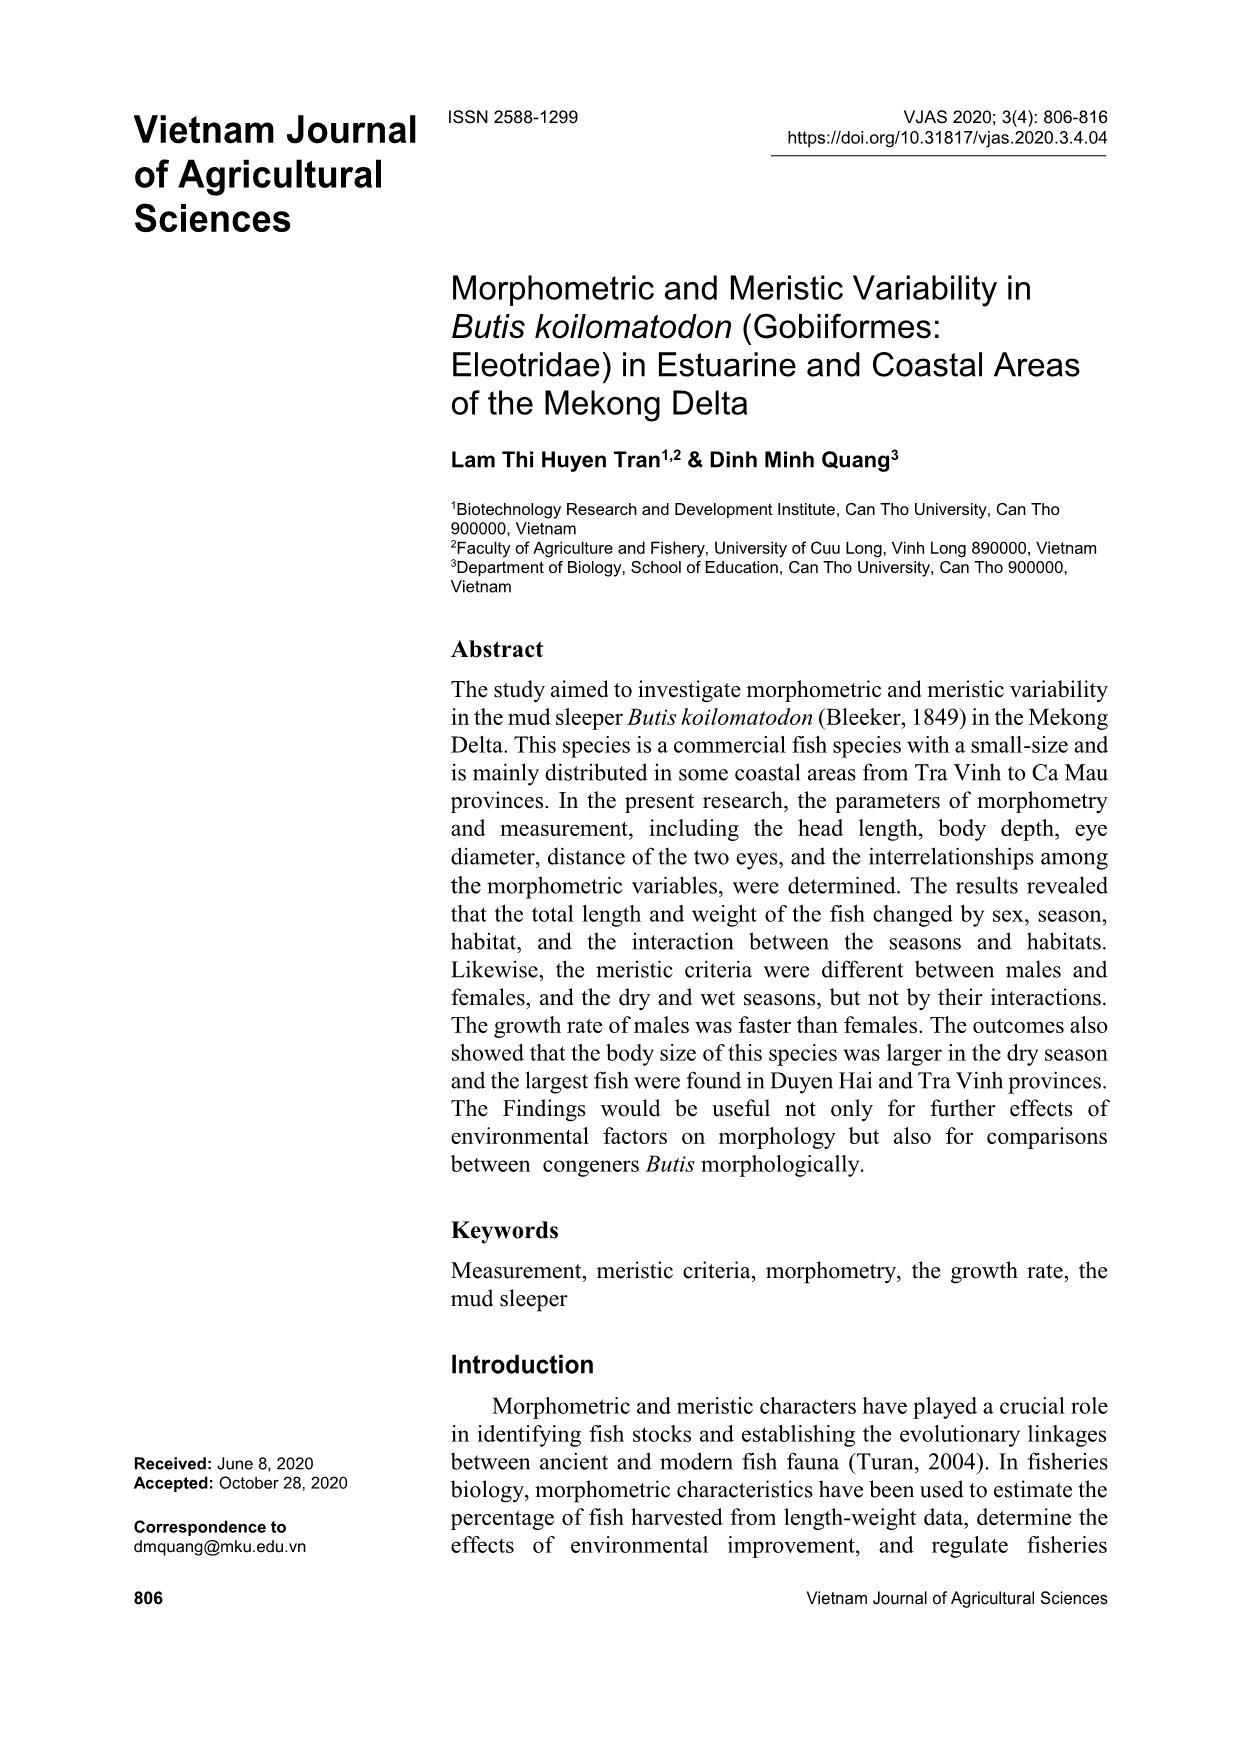 Morphometric and meristic variability in butis koilomatodon (gobiiformes: eleotridae) in estuarine and coastal areas of the Mekong delta trang 1